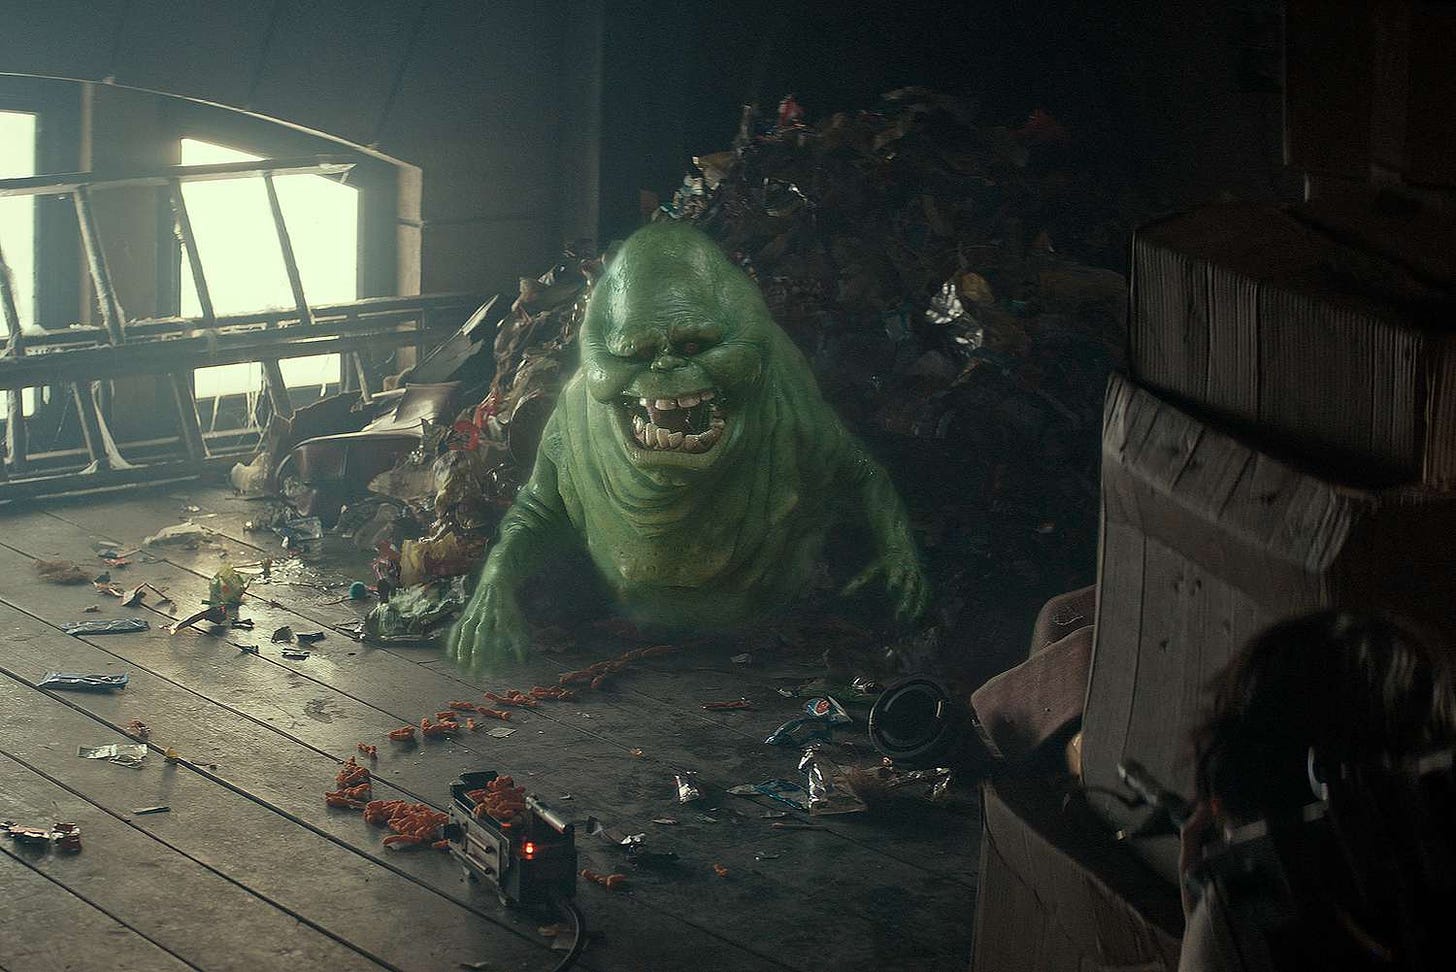 Ghostbusters star Finn Wolfhard reveals what ghost slime tastes like